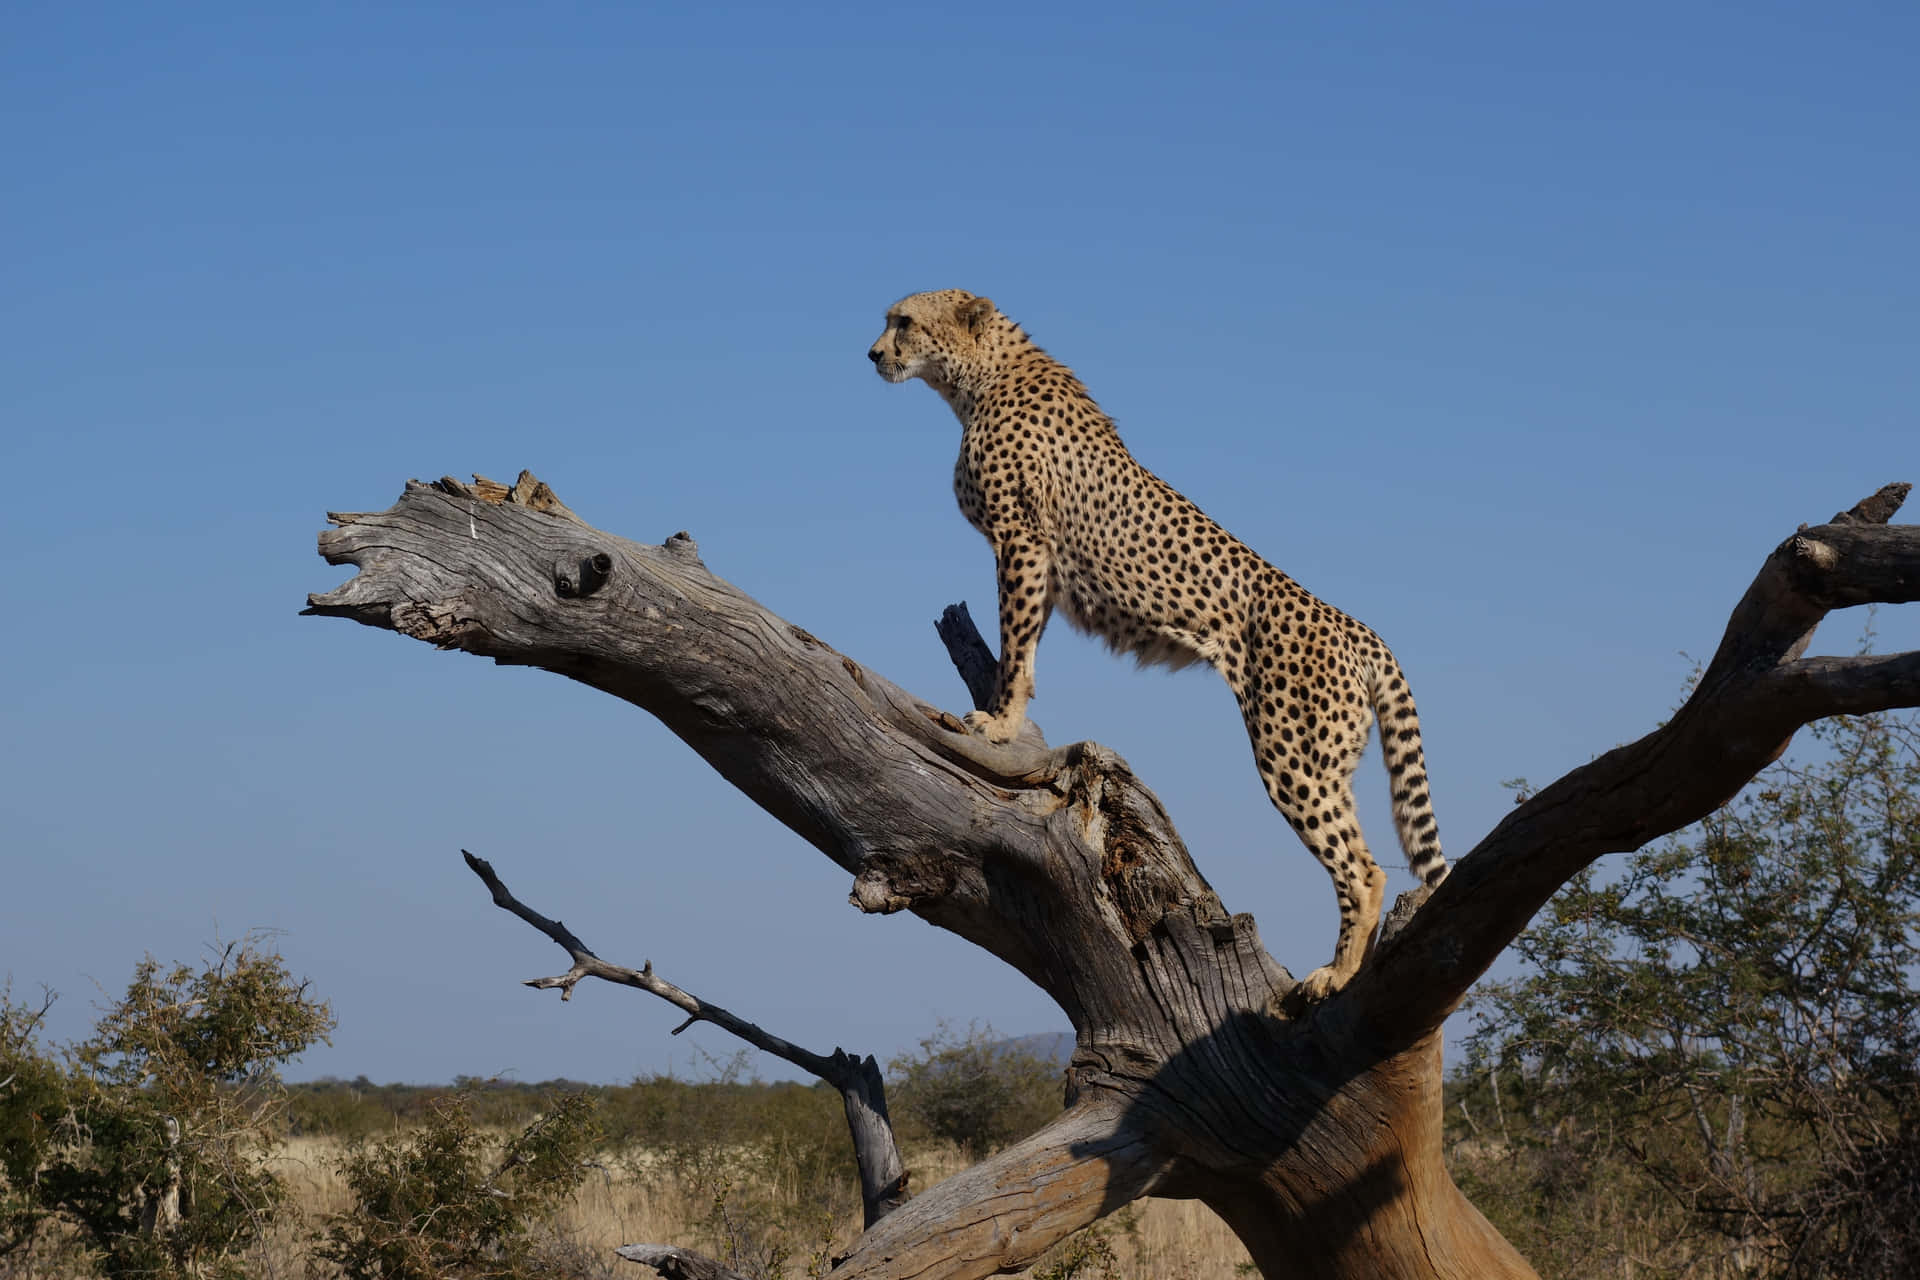 A close-up of a stunning cheetah prowling through the savannah. Wallpaper